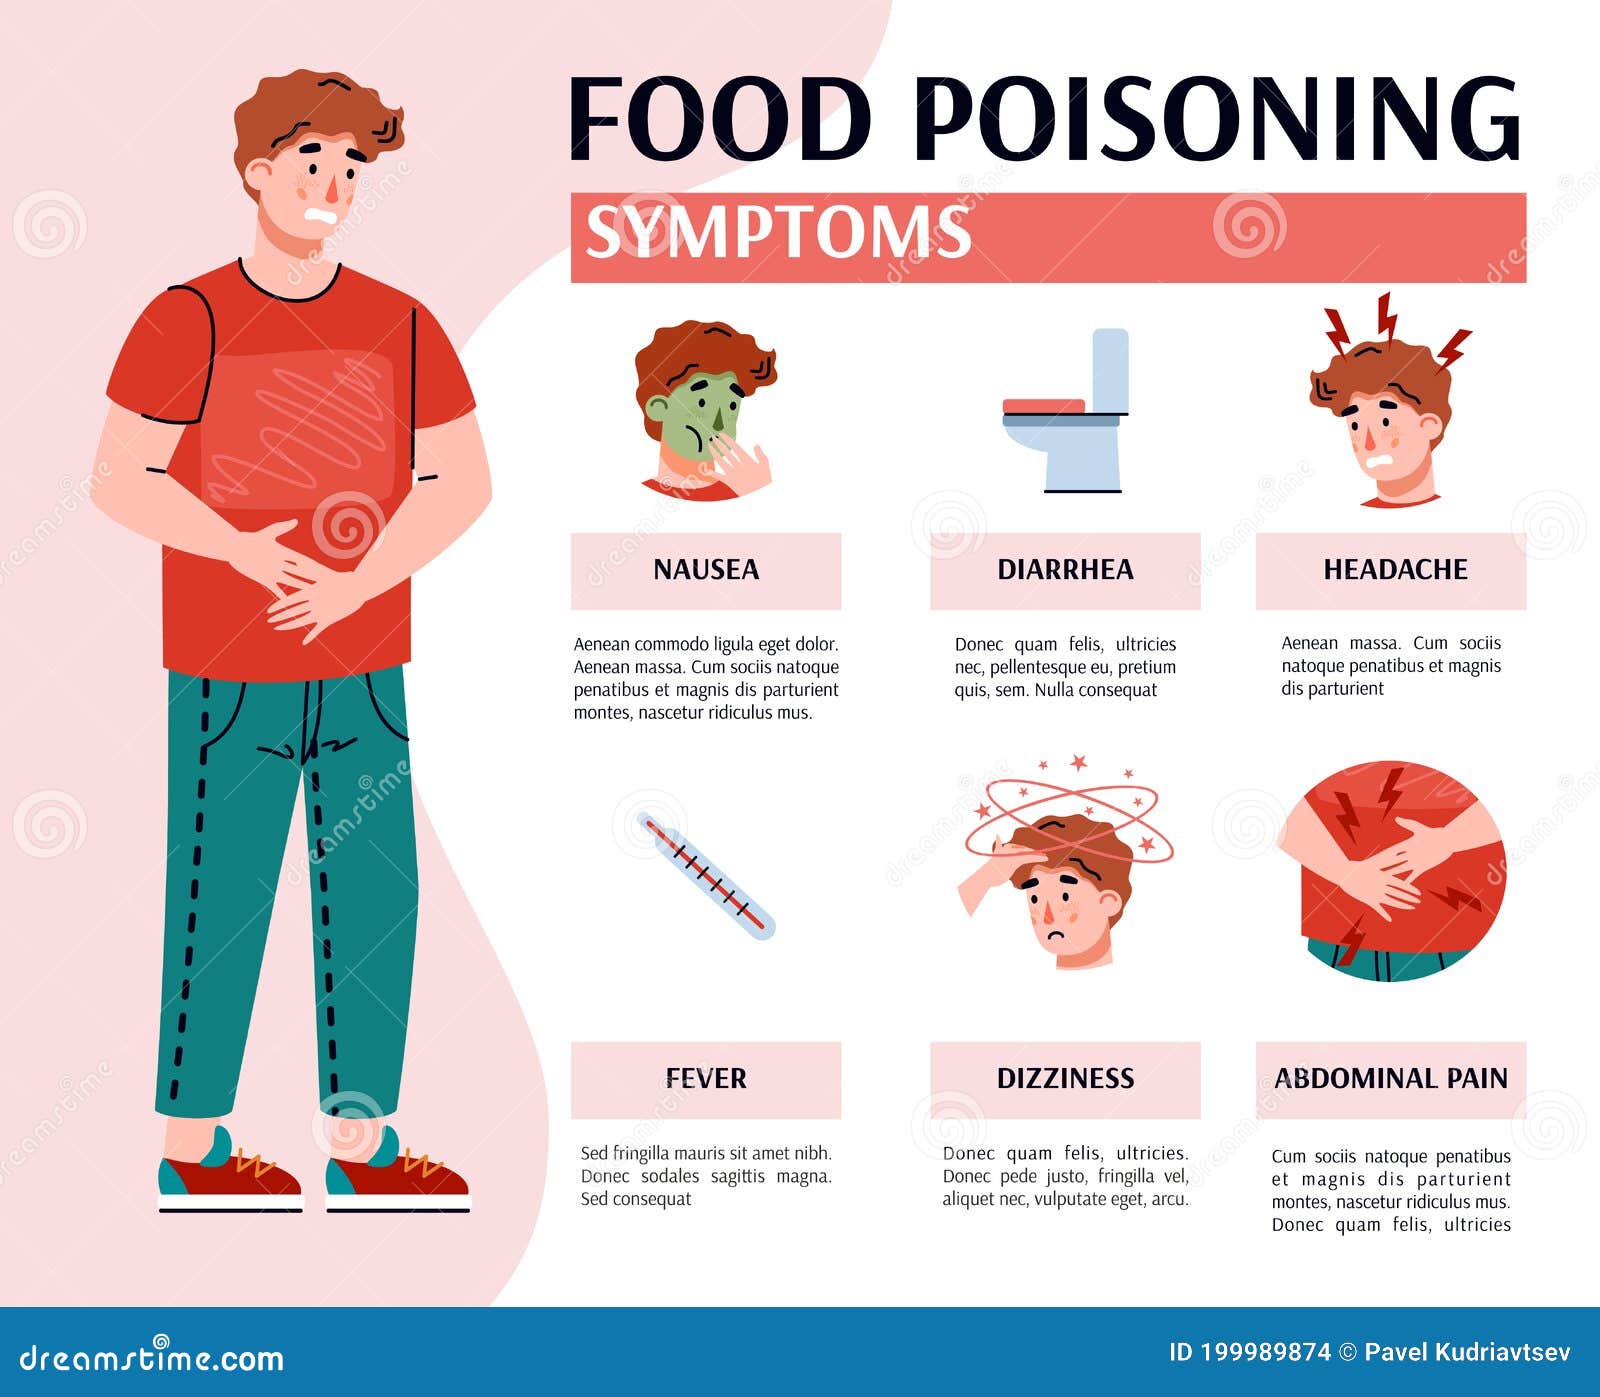 Poison symptoms food Food Poisoning: